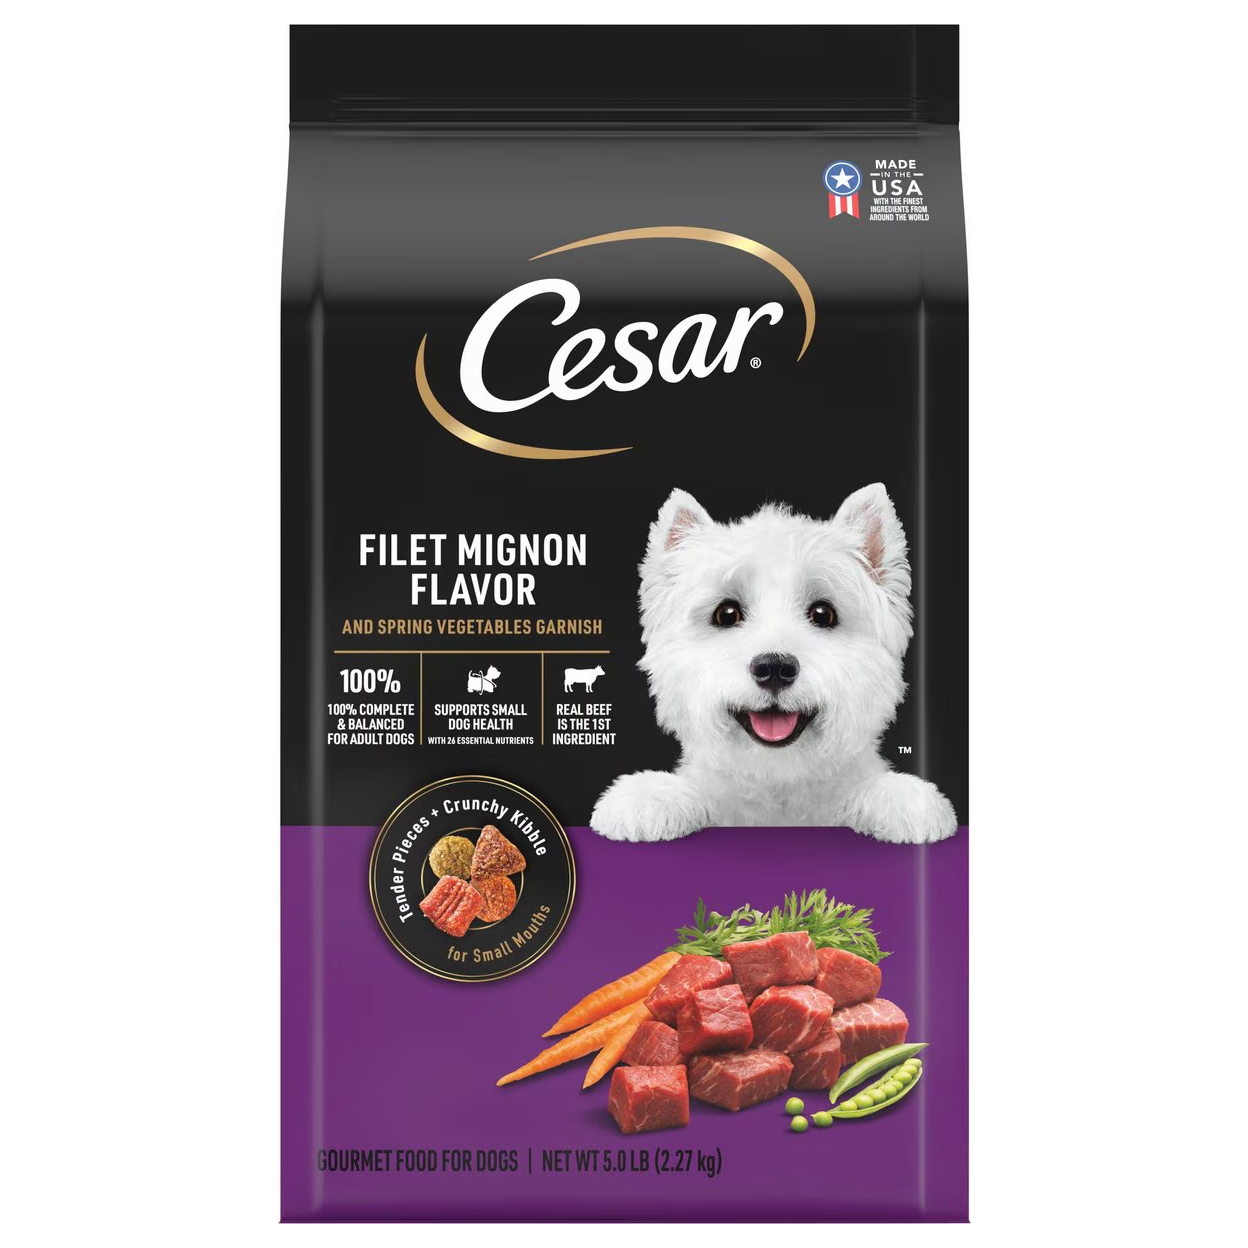 Cesar Filet Mignon Flavor Small Breed Dry Dog Food